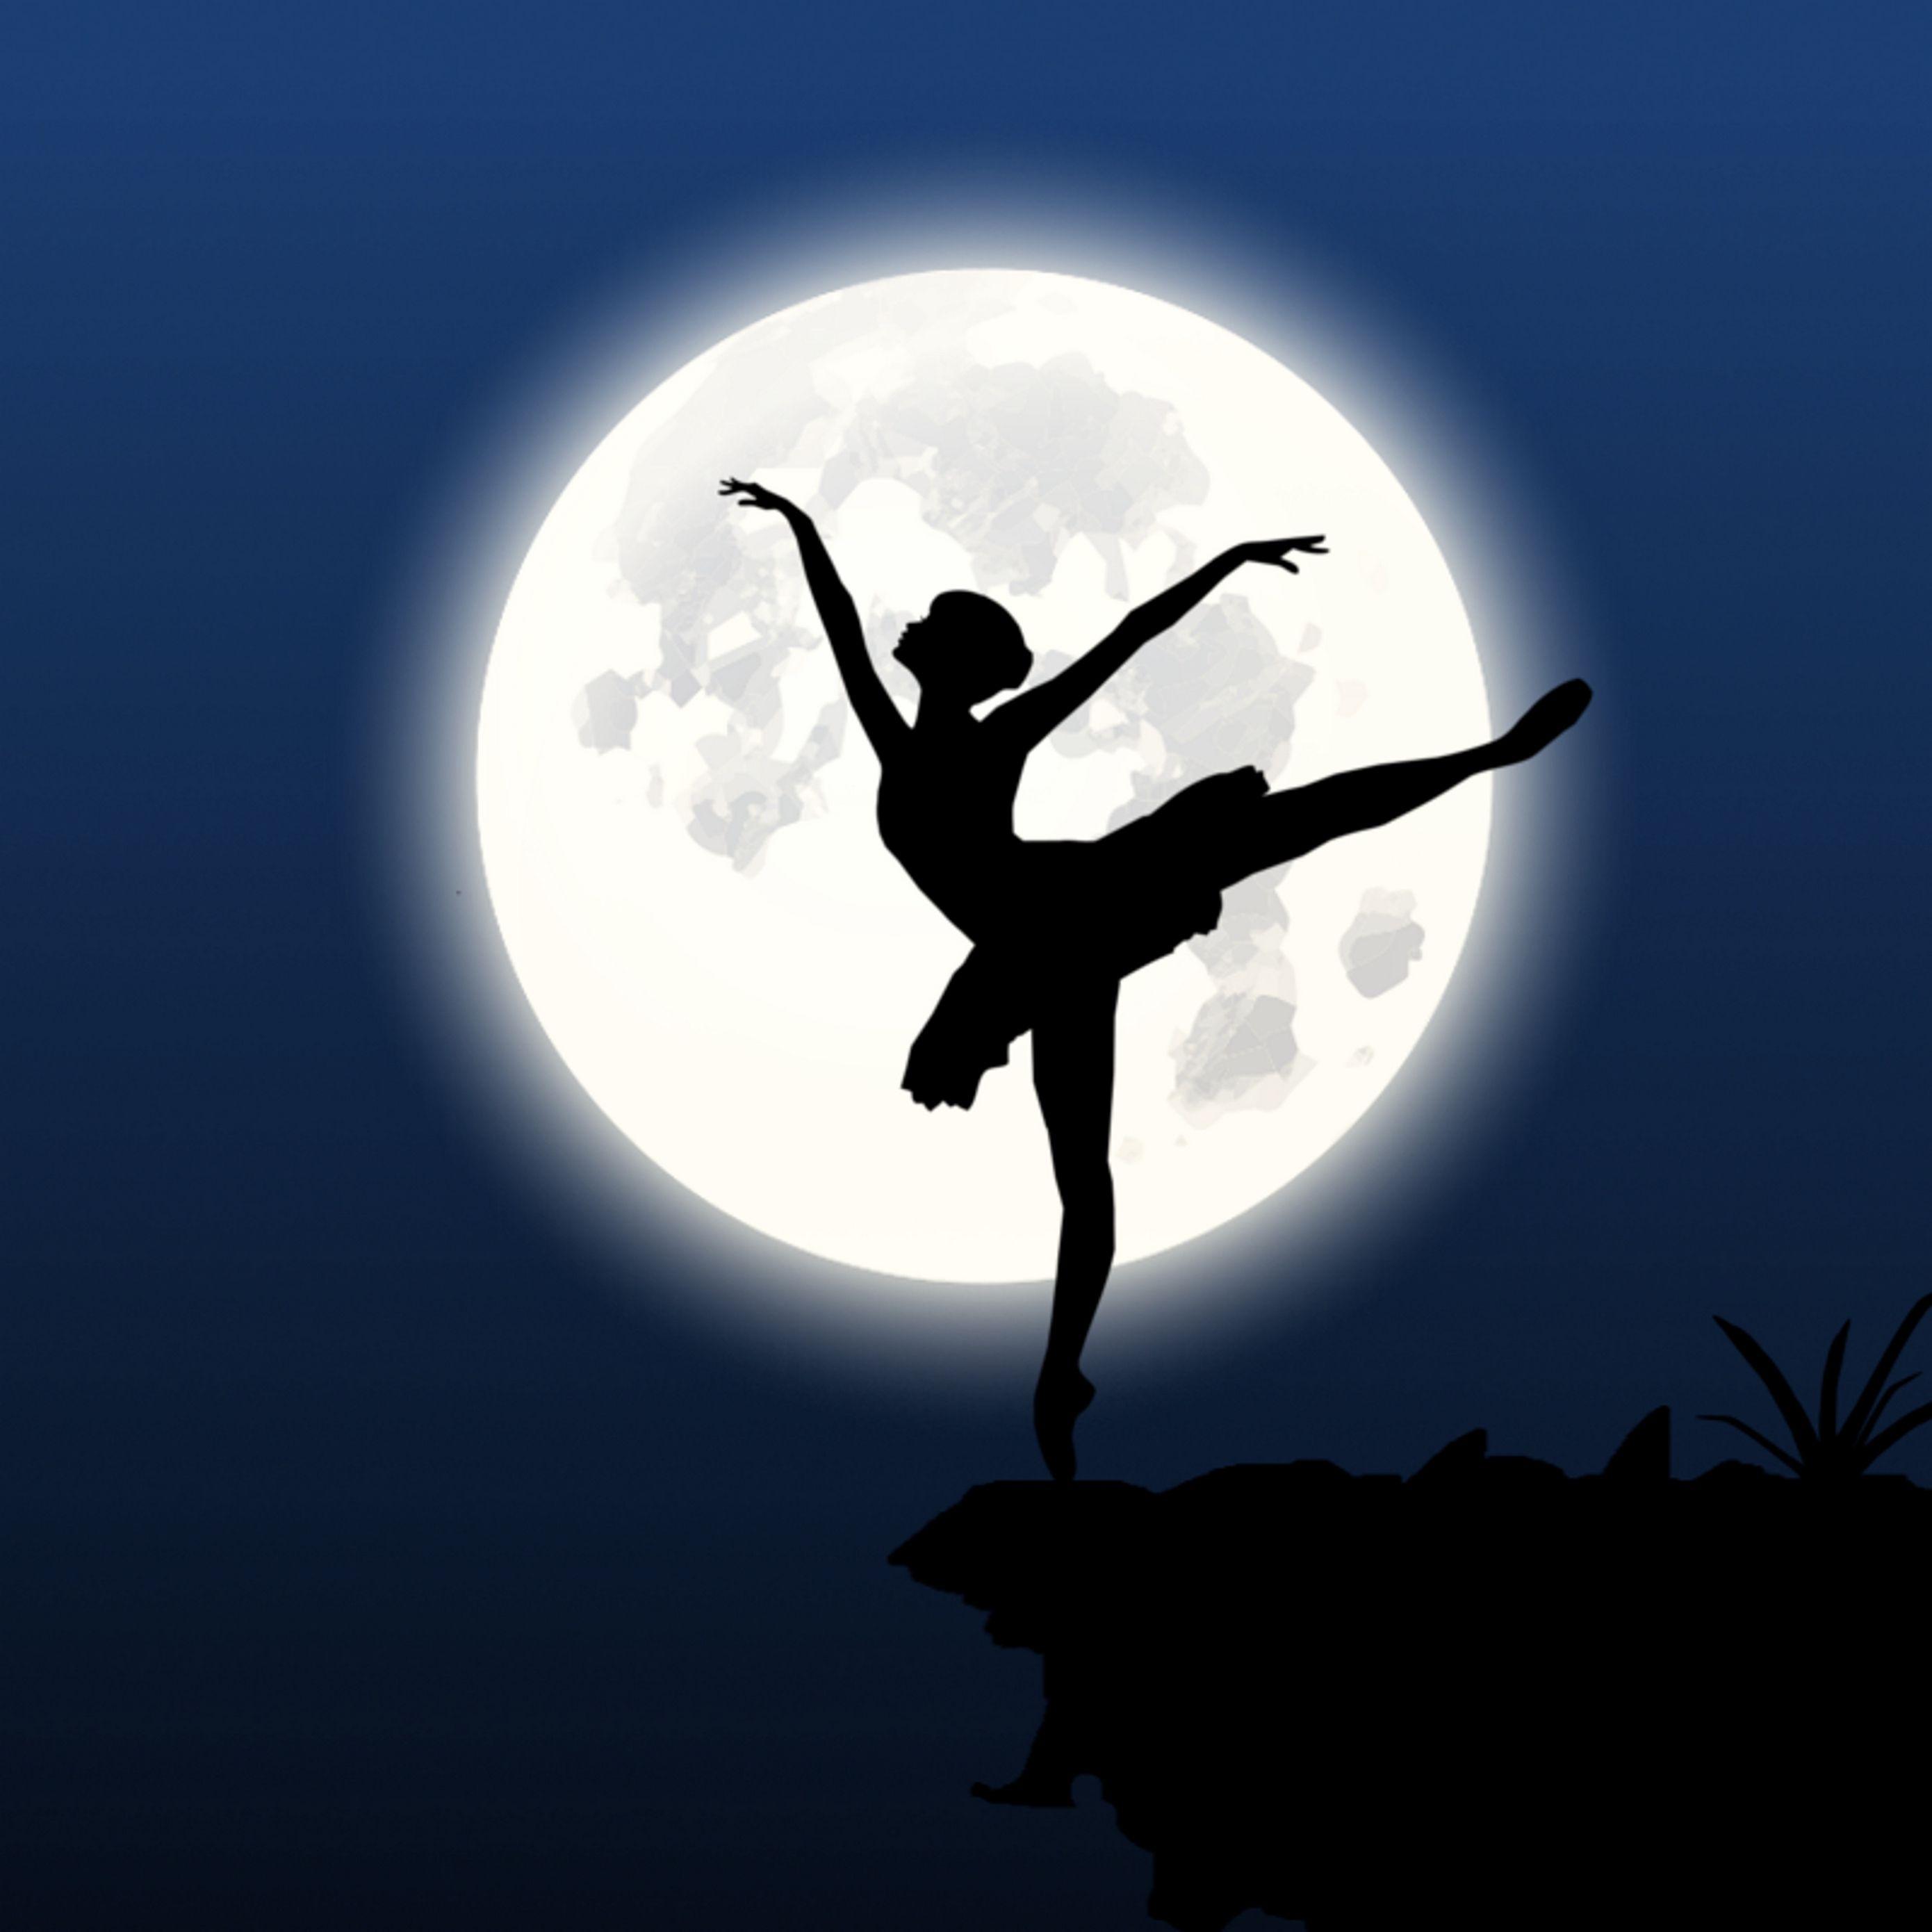 Download wallpaper 2780x2780 ballerina, silhouette, moon